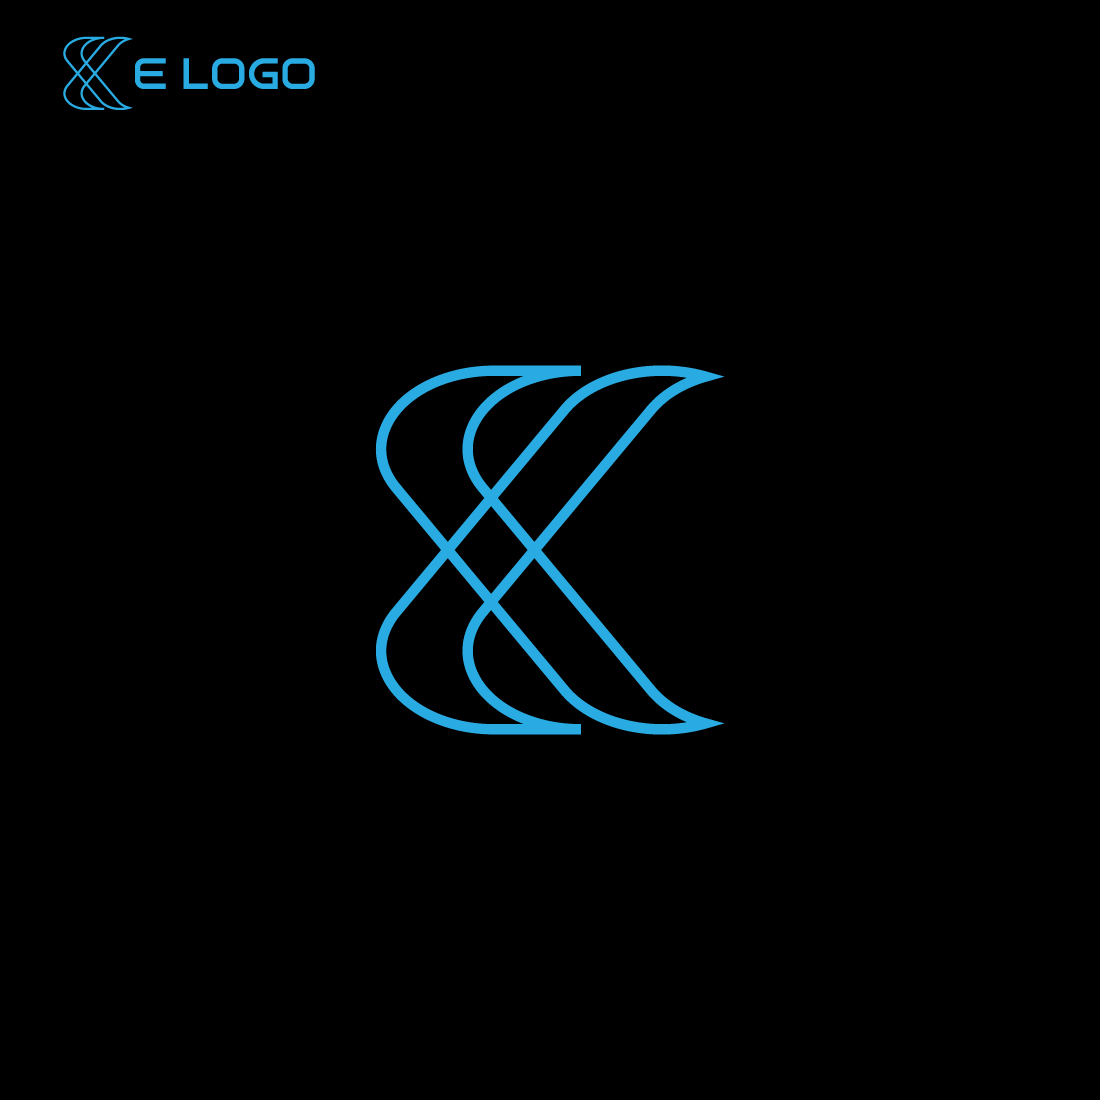 Minimal Letter E Logo Design and Brand Identity preview image.